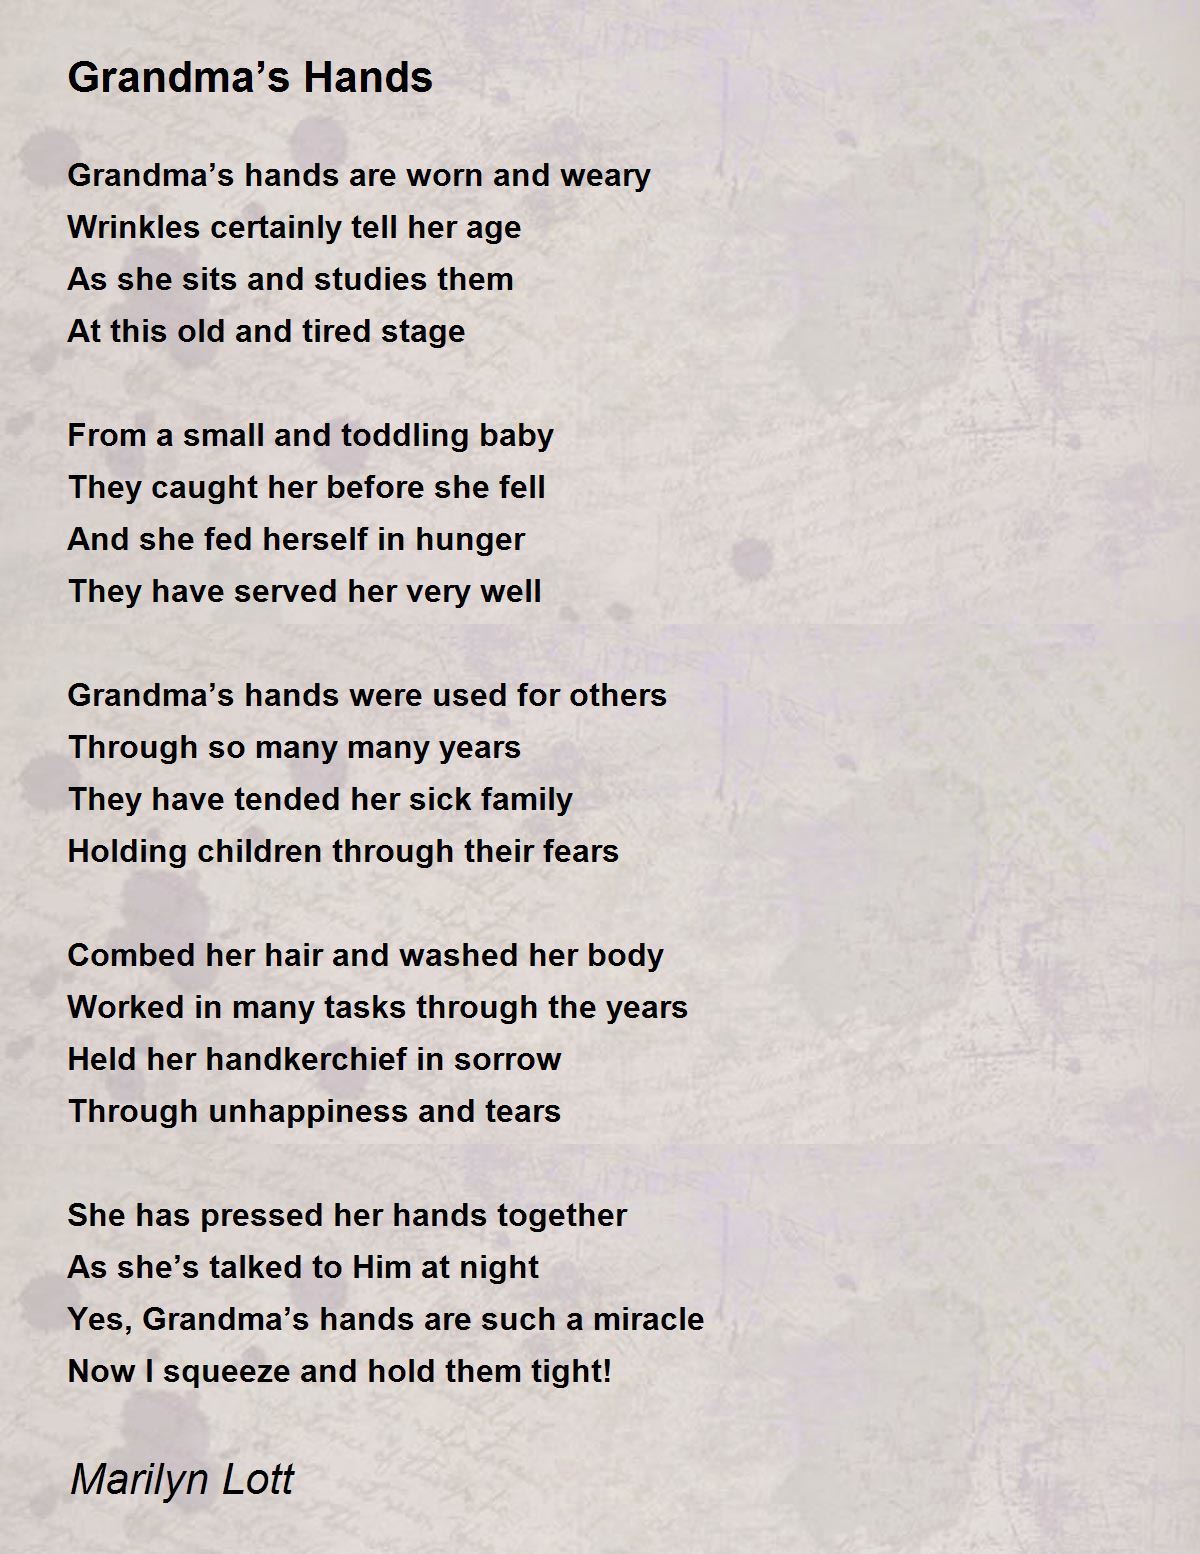 Grandma's Hands - Grandma's Hands Poem by Marilyn Lott